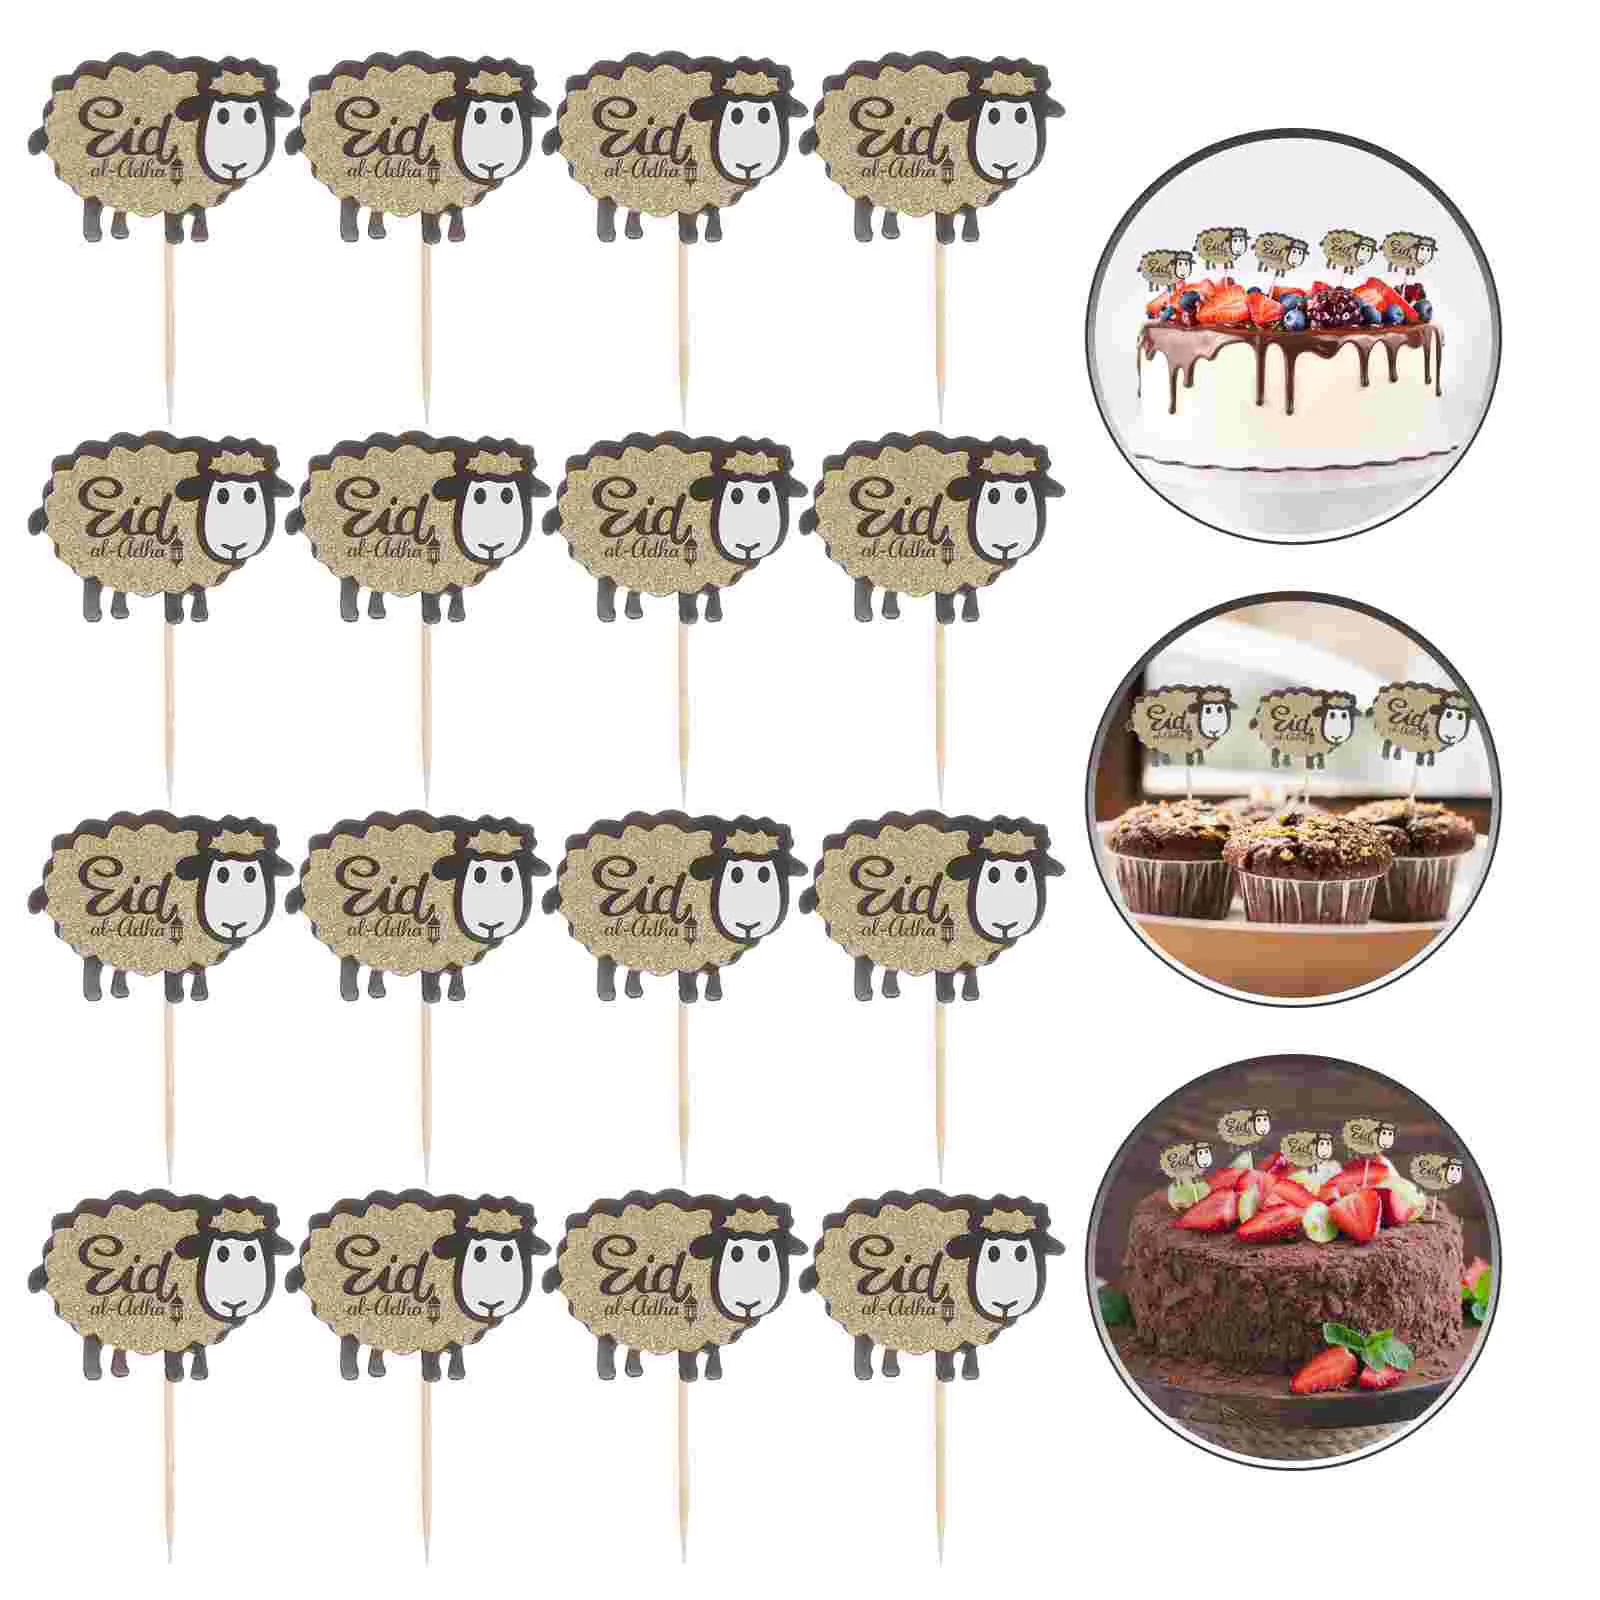 

24 Pcs Eid Mubarak Cupcakes Creative Inserted Cards Inserting Decorative Props Moon Picks Party Ornaments Top Hat